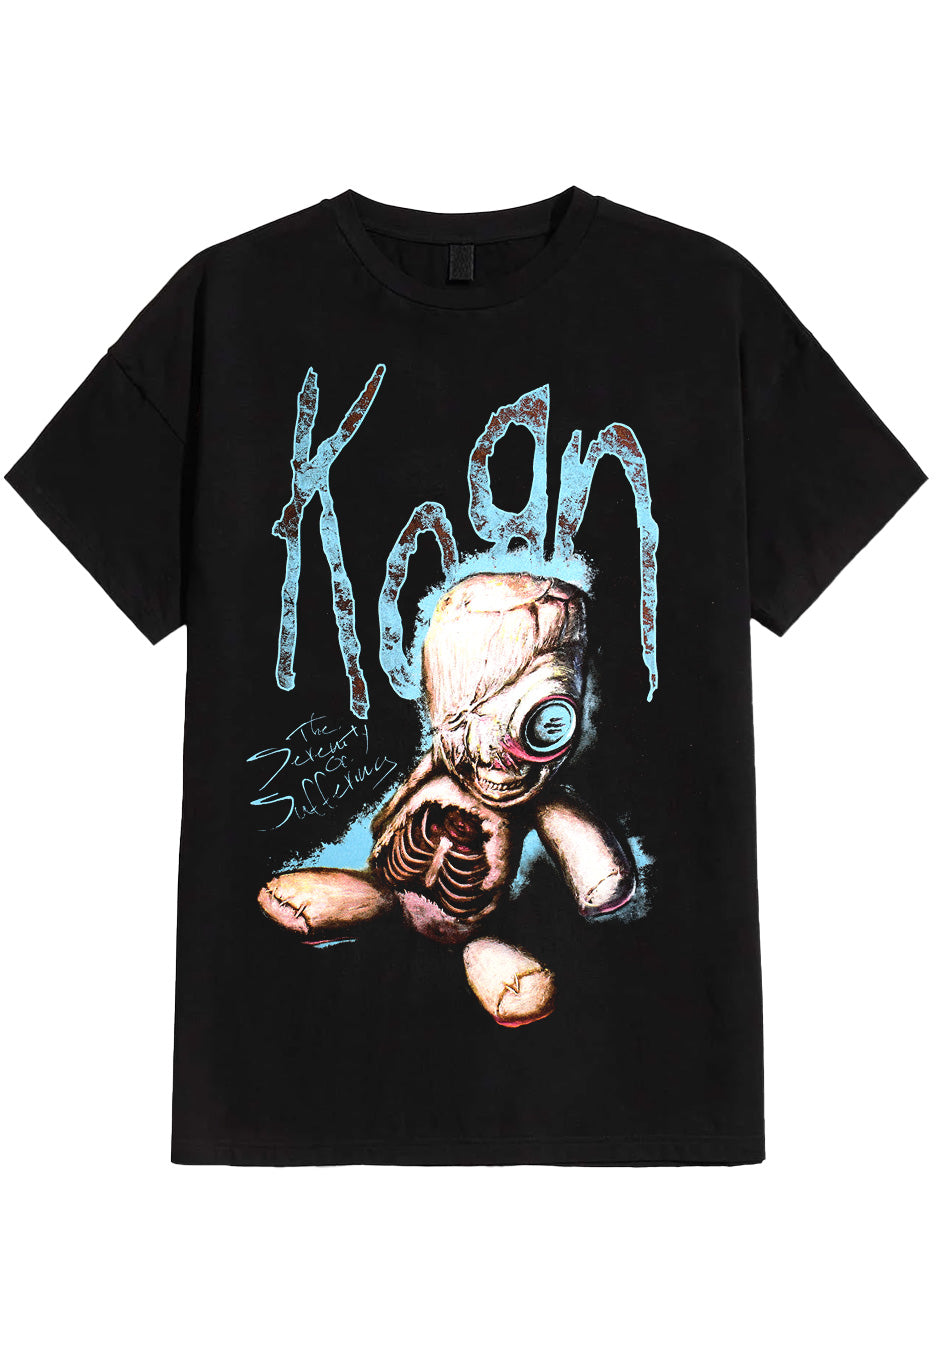 Korn - SoS Doll - T-Shirt